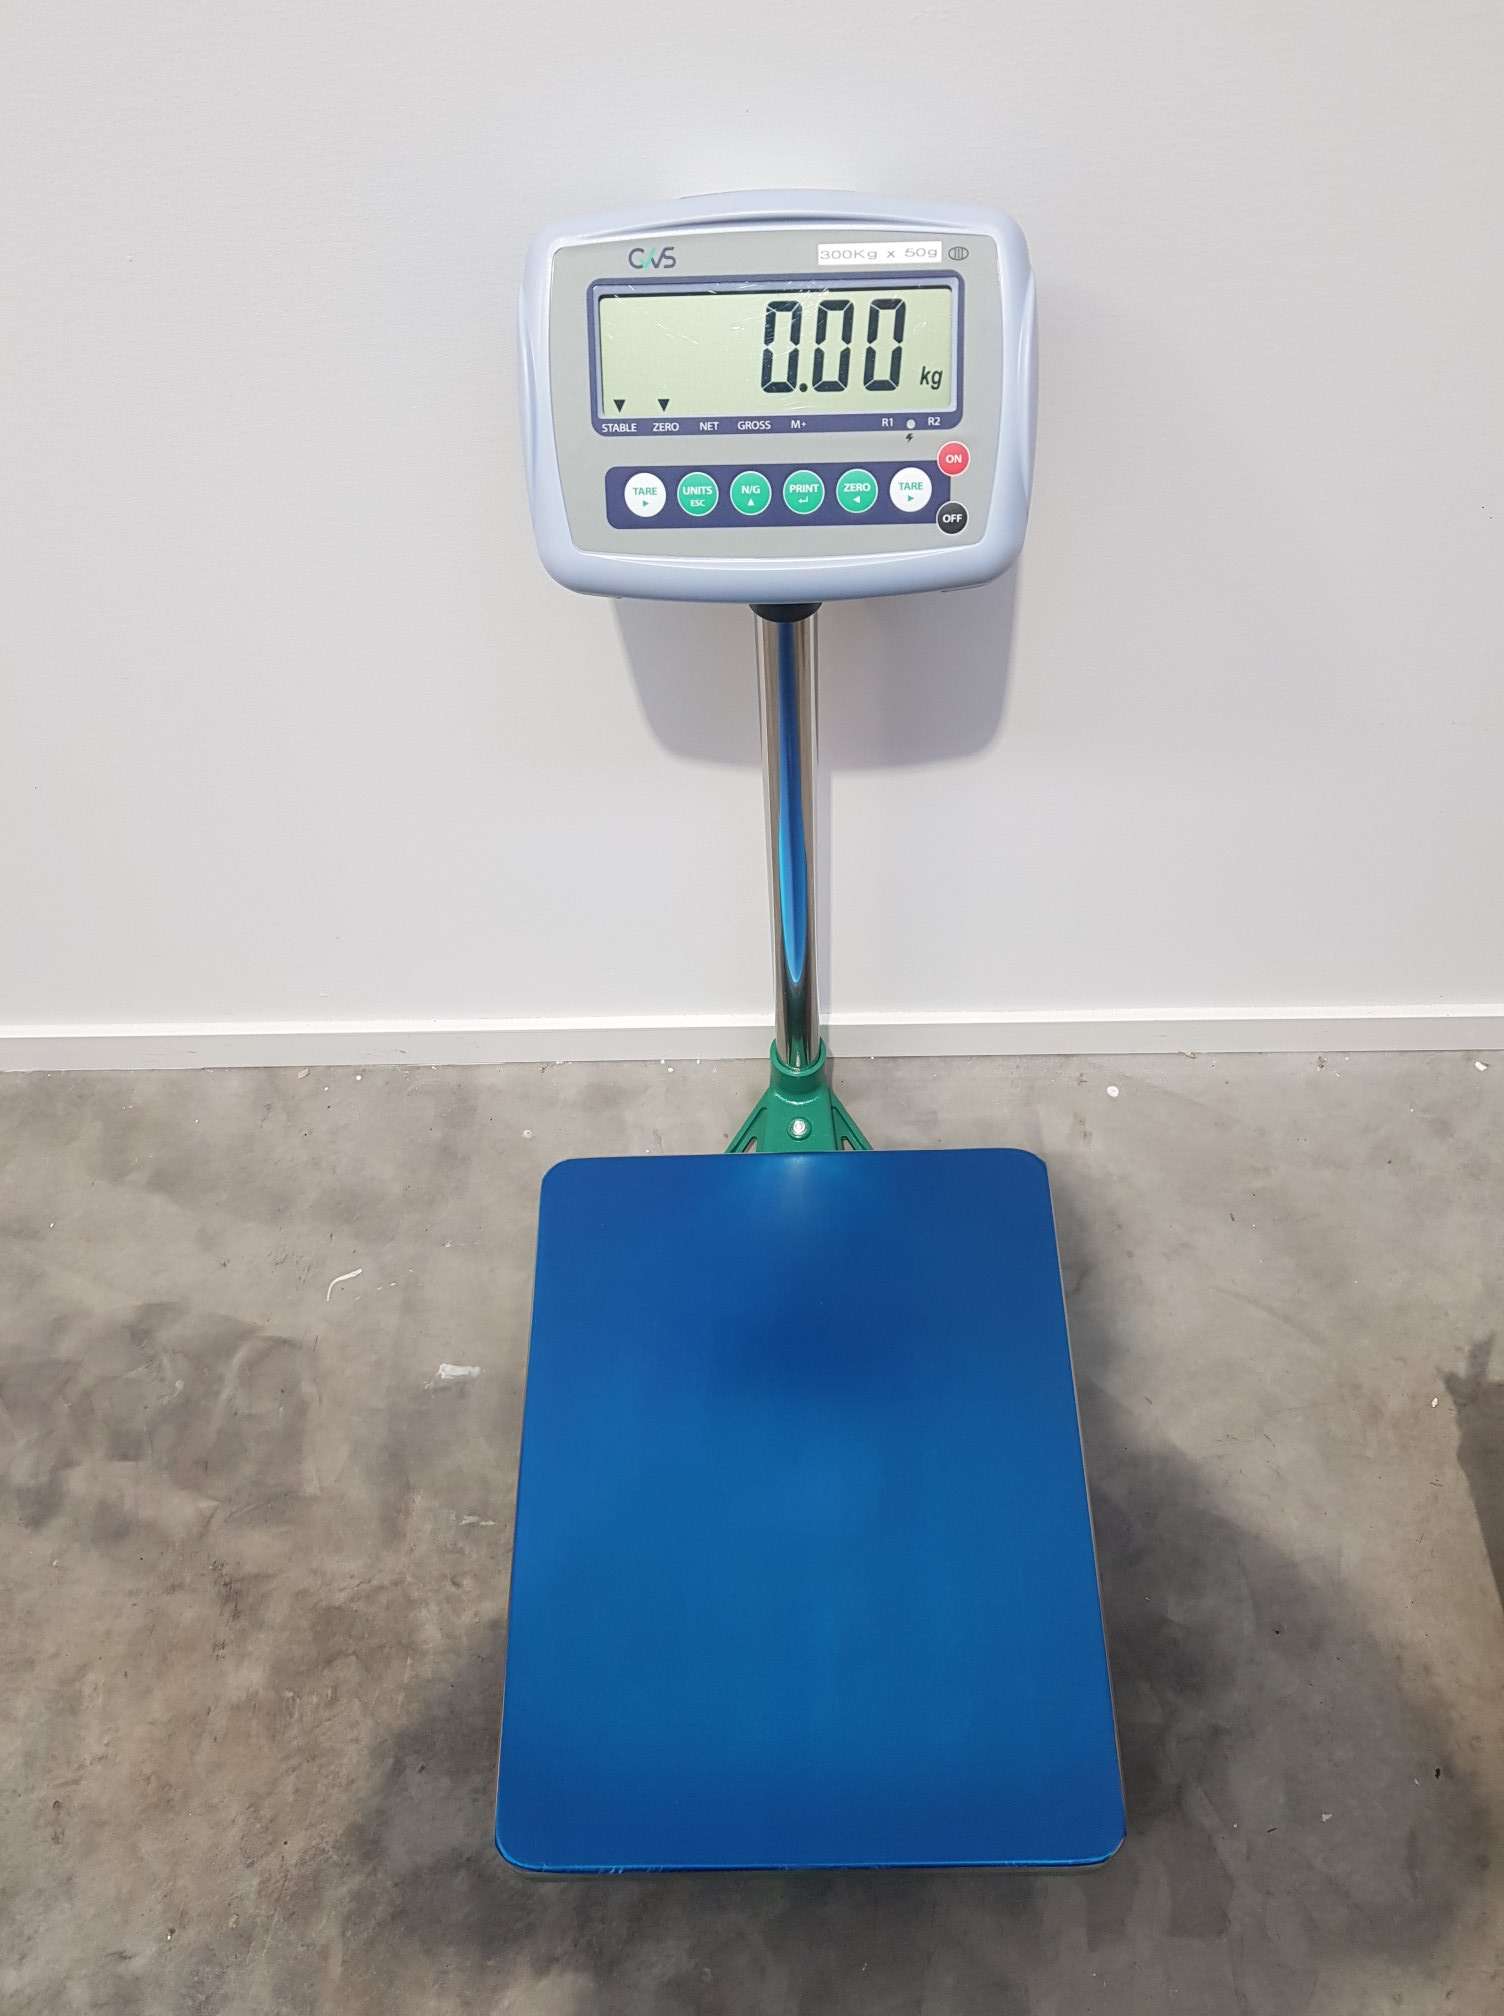 CWSCWB7 5242 Heavy Duty Gym/Personal Weighing Platform Scales